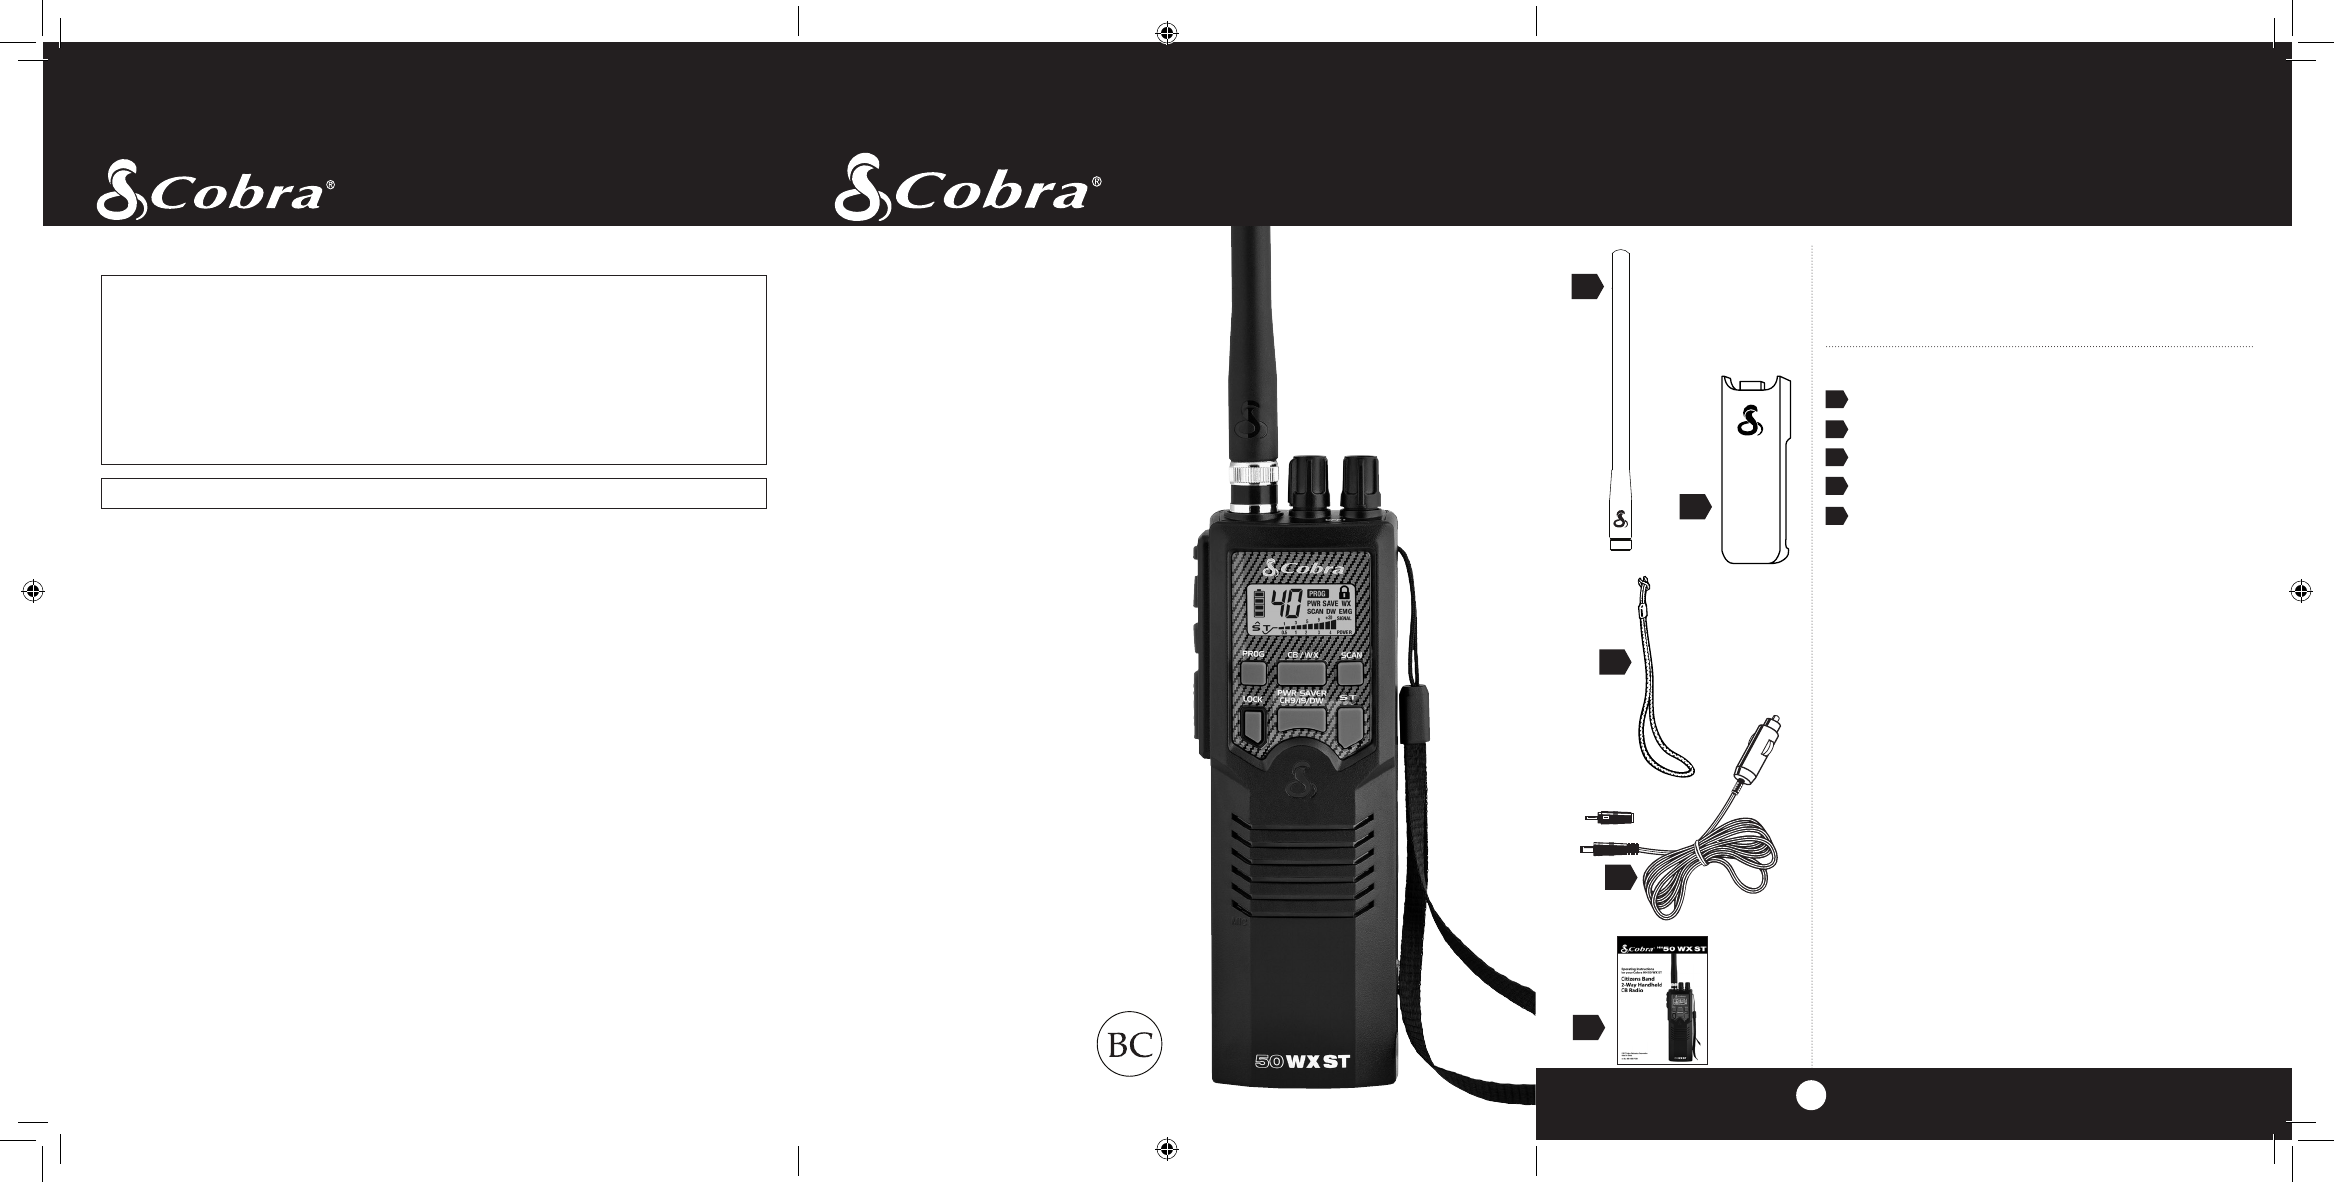 Cobra Electronics HH50WXST HANDHELD CB TRANSCEIVER User Manual Manual USA